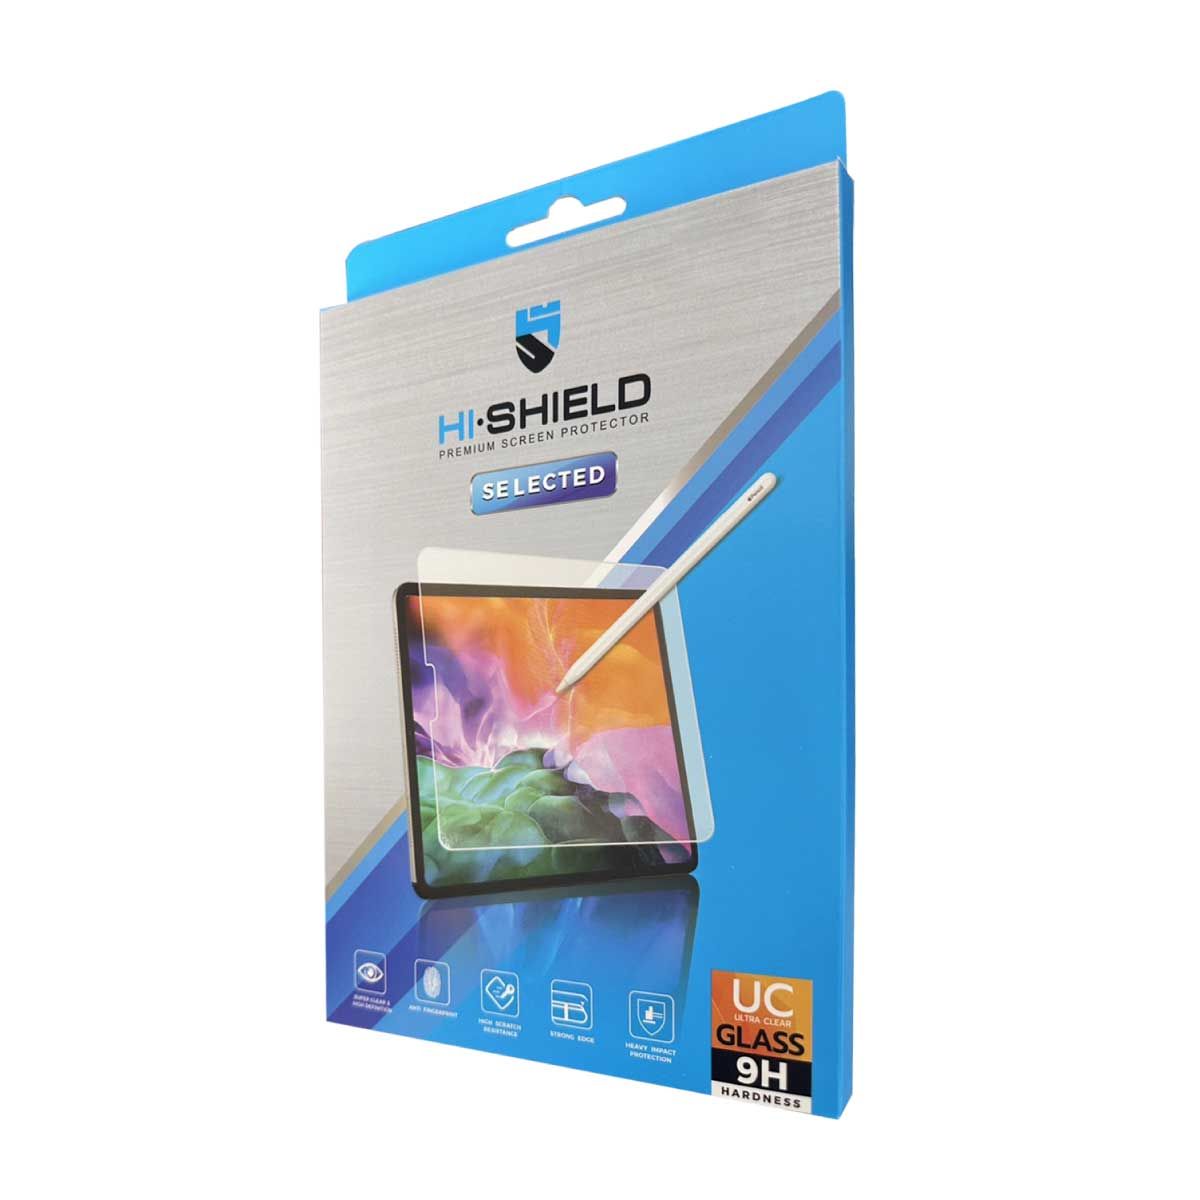 Hi-Shield TG SELECTED ฟิล์มกระจก เต็มจอ สำหรับ Samsung Galaxy Tab S9Plus  / S8Plus  /  S7 FE